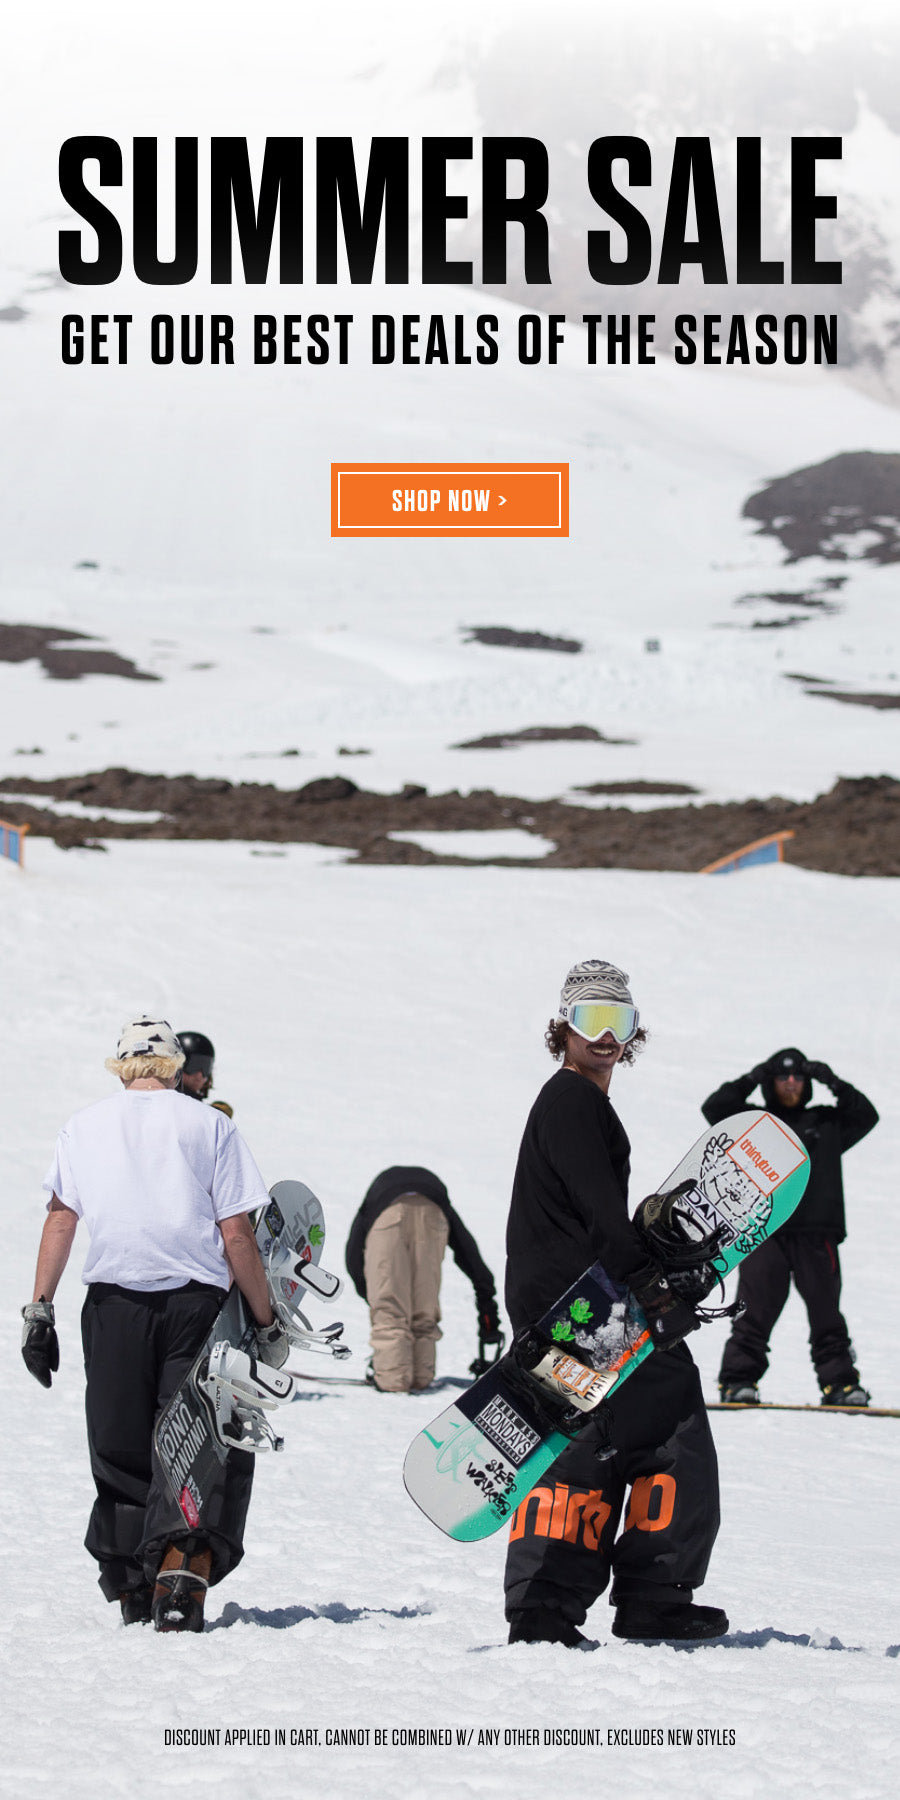 thirtytwo Rider Driven Snowboarding Shop Online